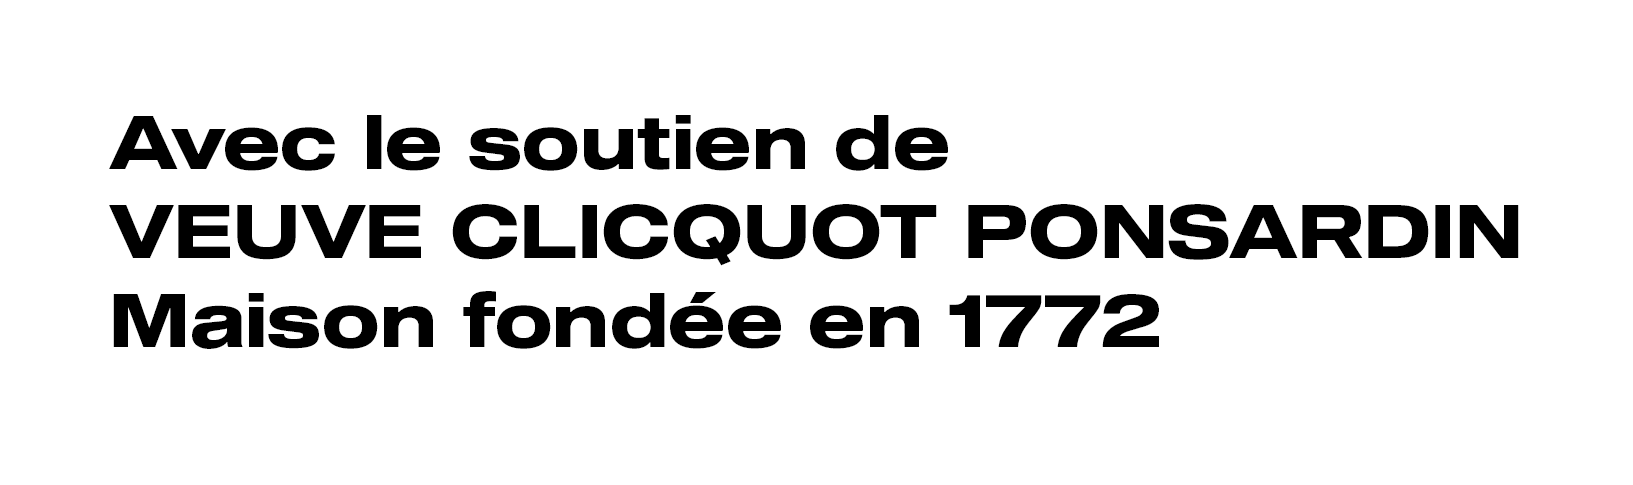 Veuve Clicquot Ponsardin Logo PNG & Vector (EPS) Free Download